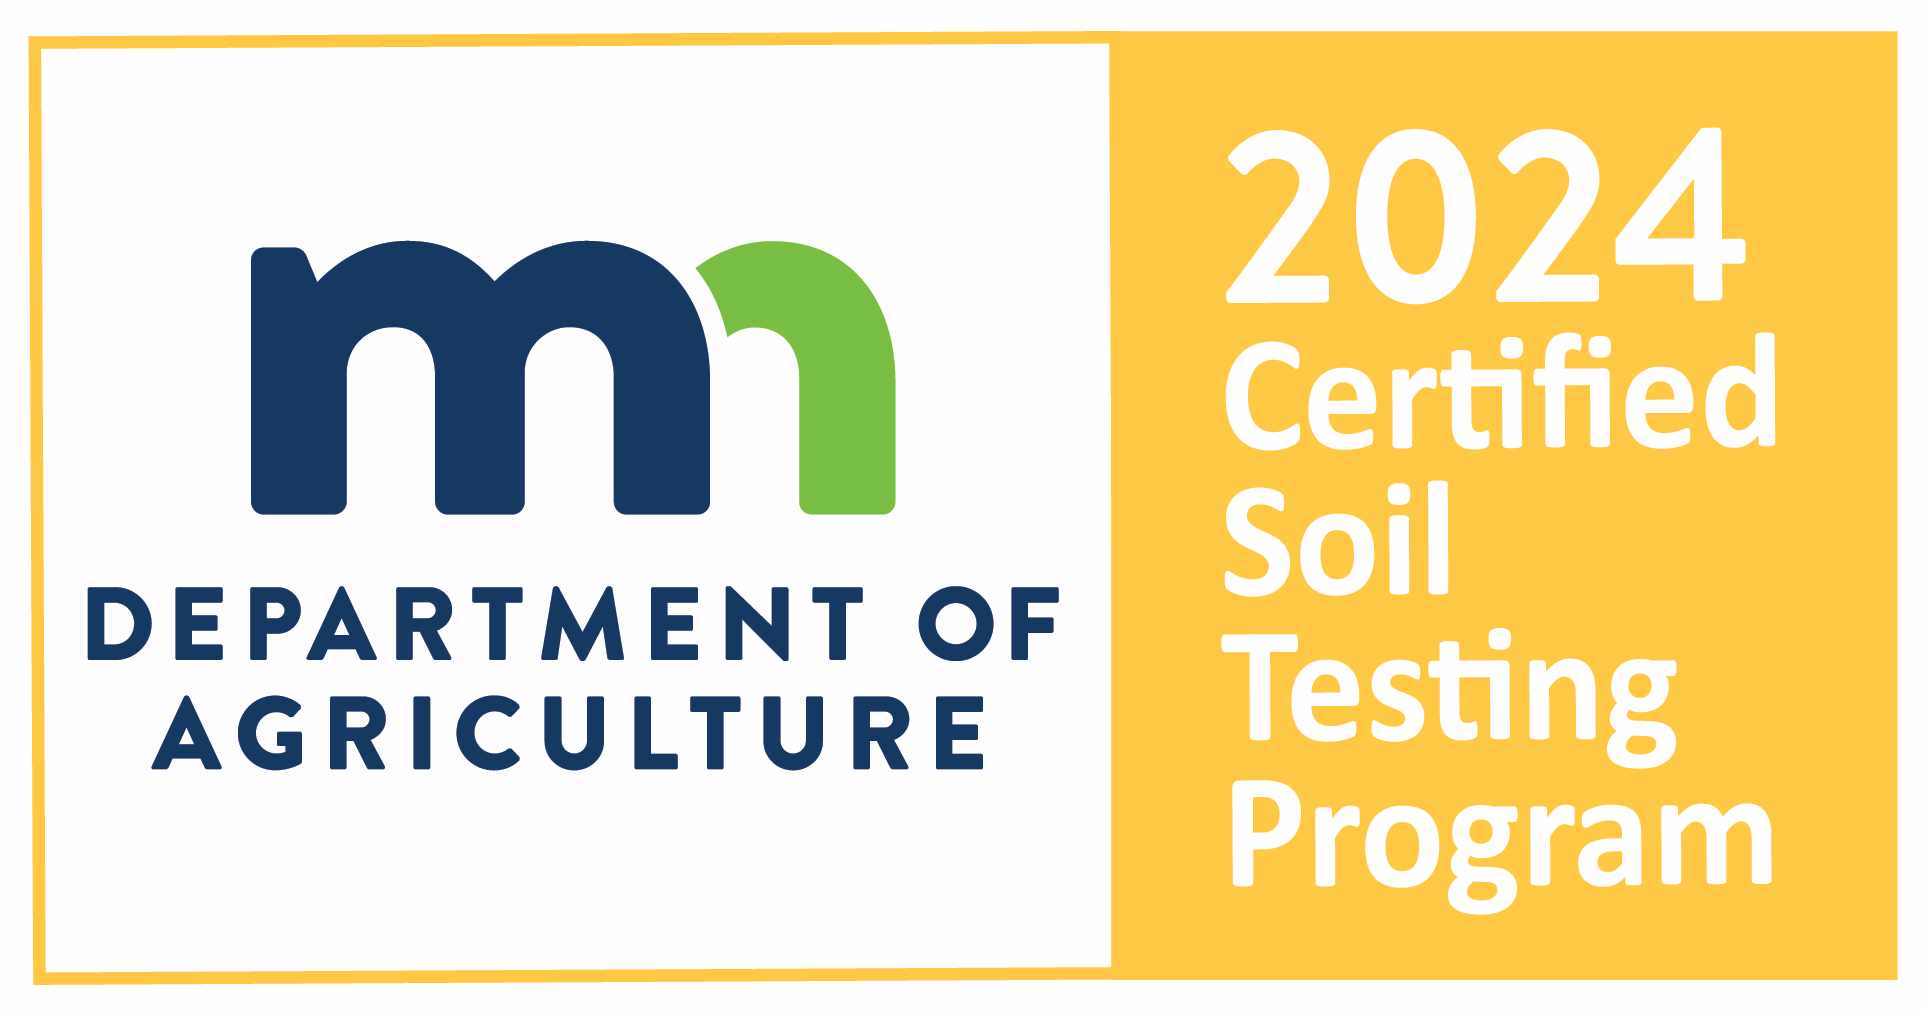 2024 Certified Soil Testing Program